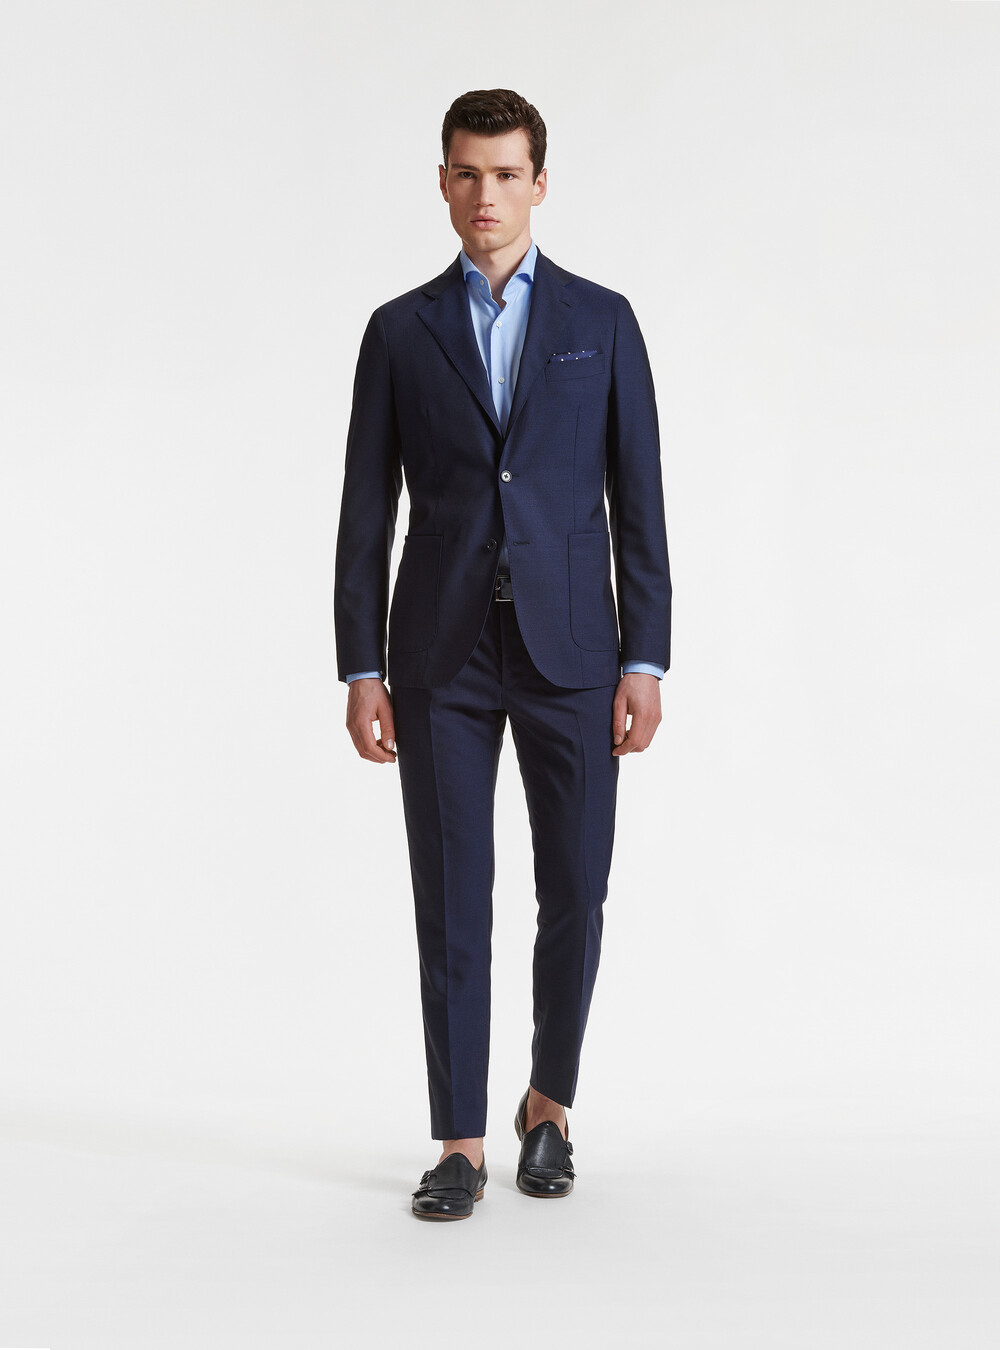 Drop 4 suit blazer in pure wool Vitale Barberis Canonico | GutteridgeUS |  Suits Uomo